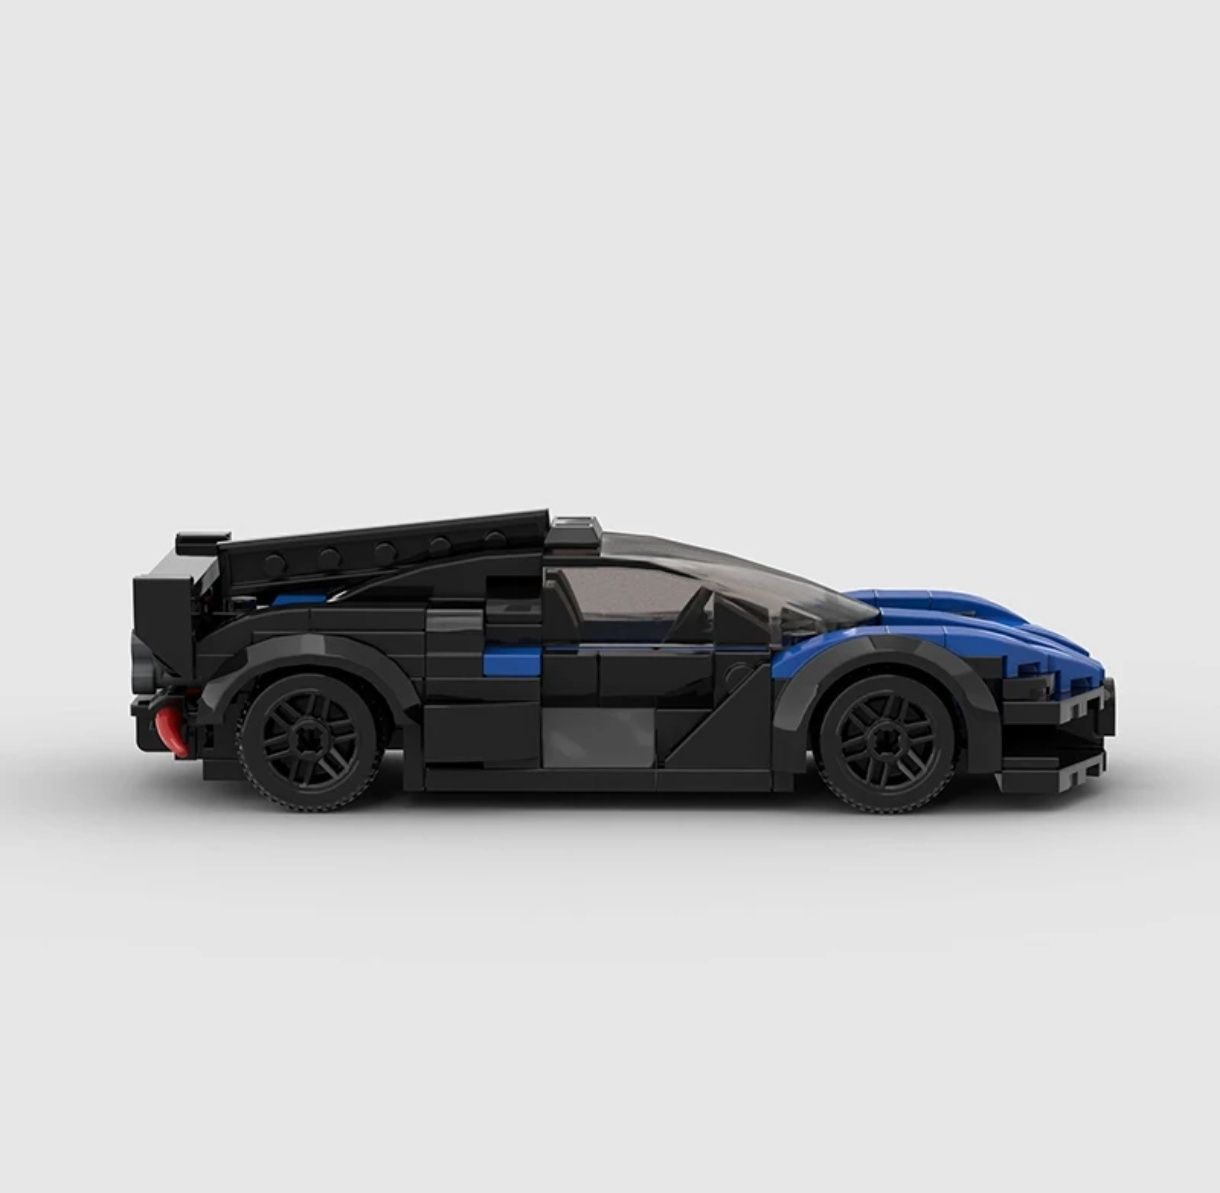 Mașină tip lego Bugatti Bolide